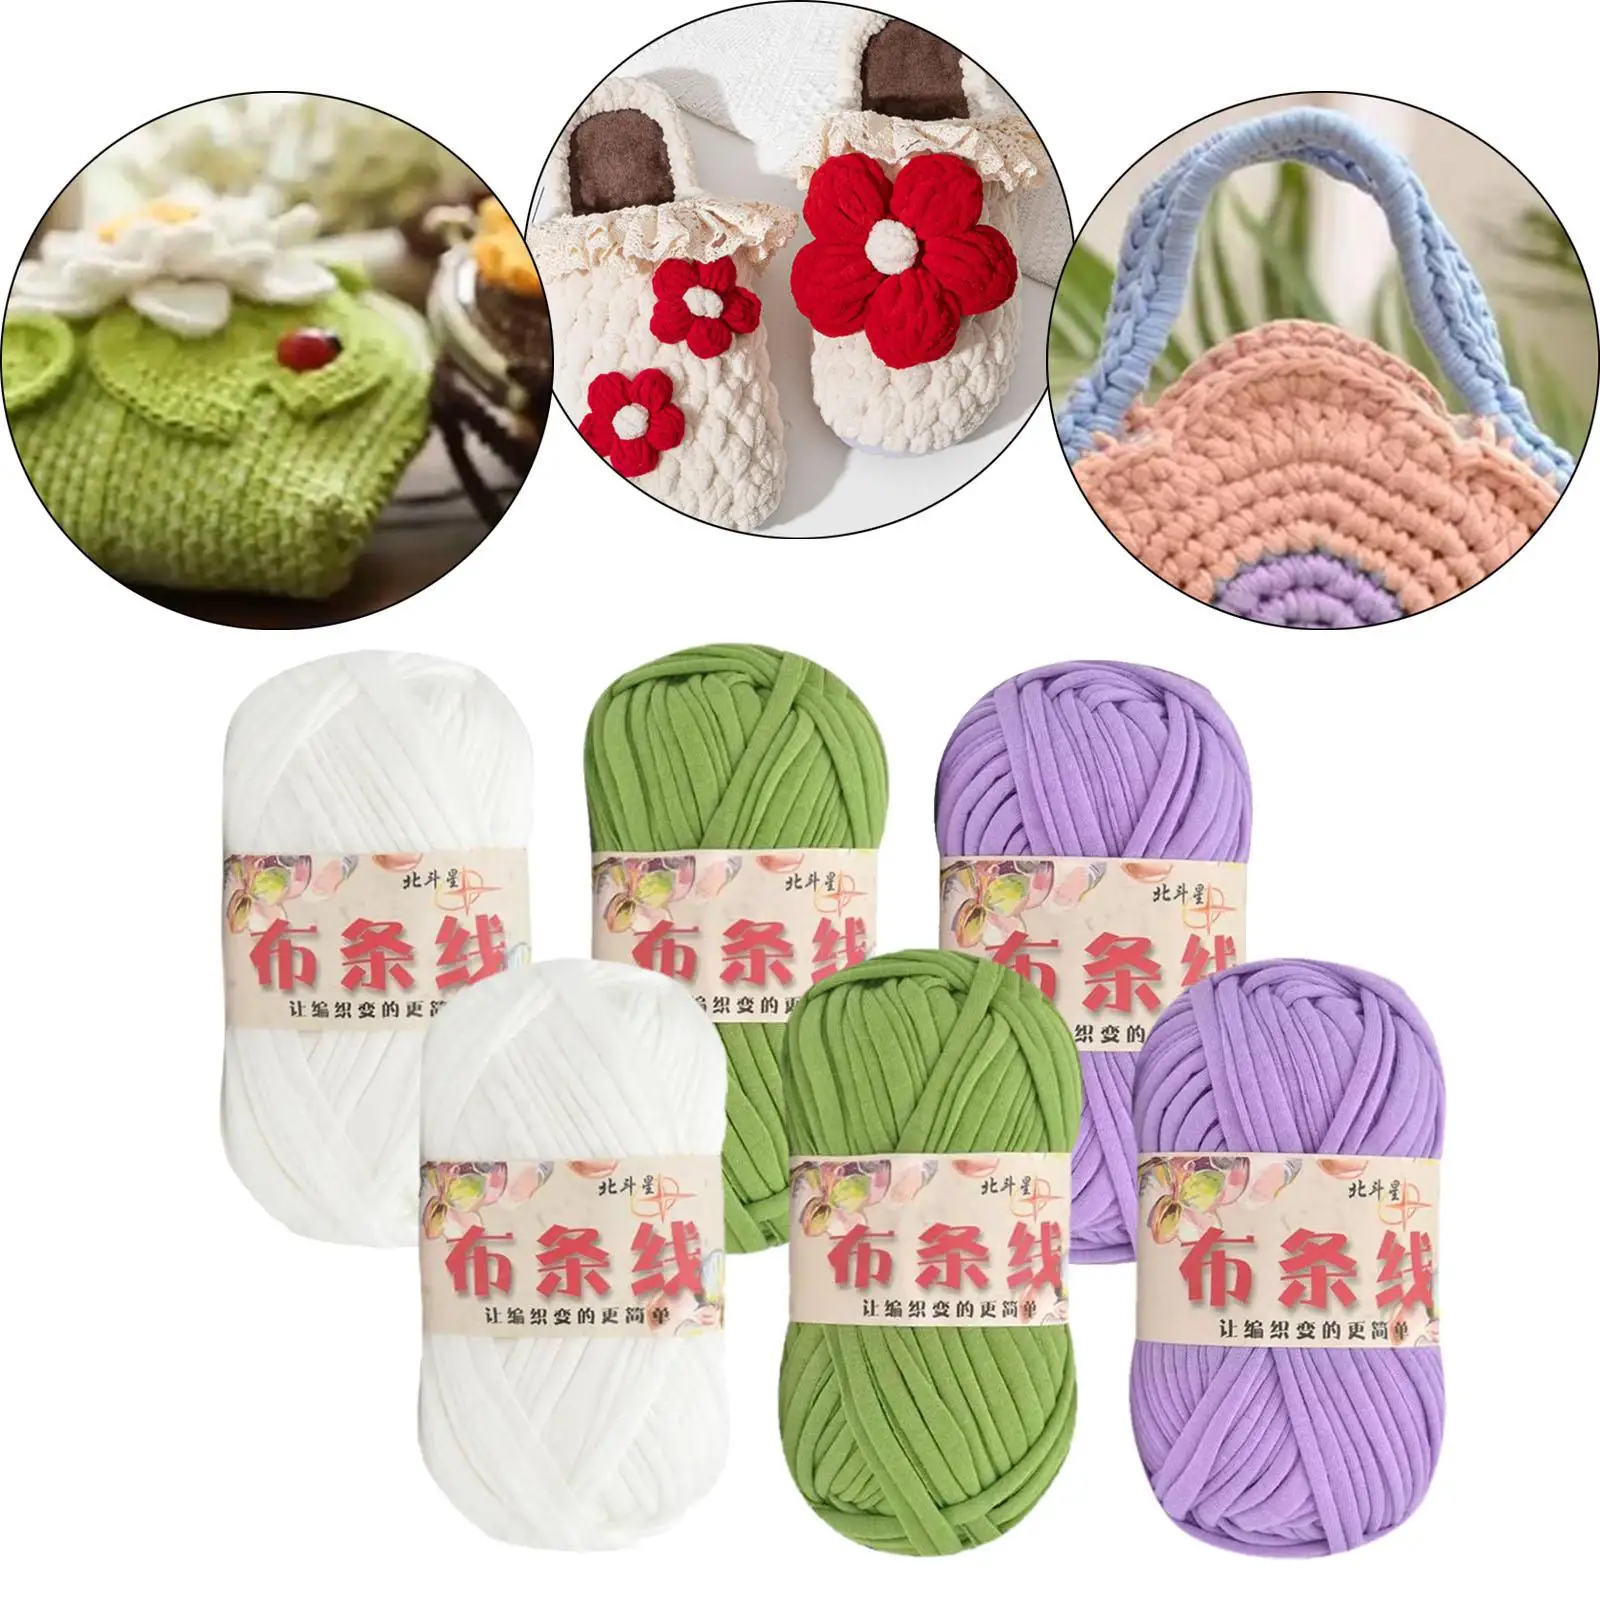 6x Knitting Yarn Set Arm Knitting Yarn Hand Knit Bulky Yarn Chunky Yarn for Baskets Doormat Rug Making Tapestry Kids Crafts